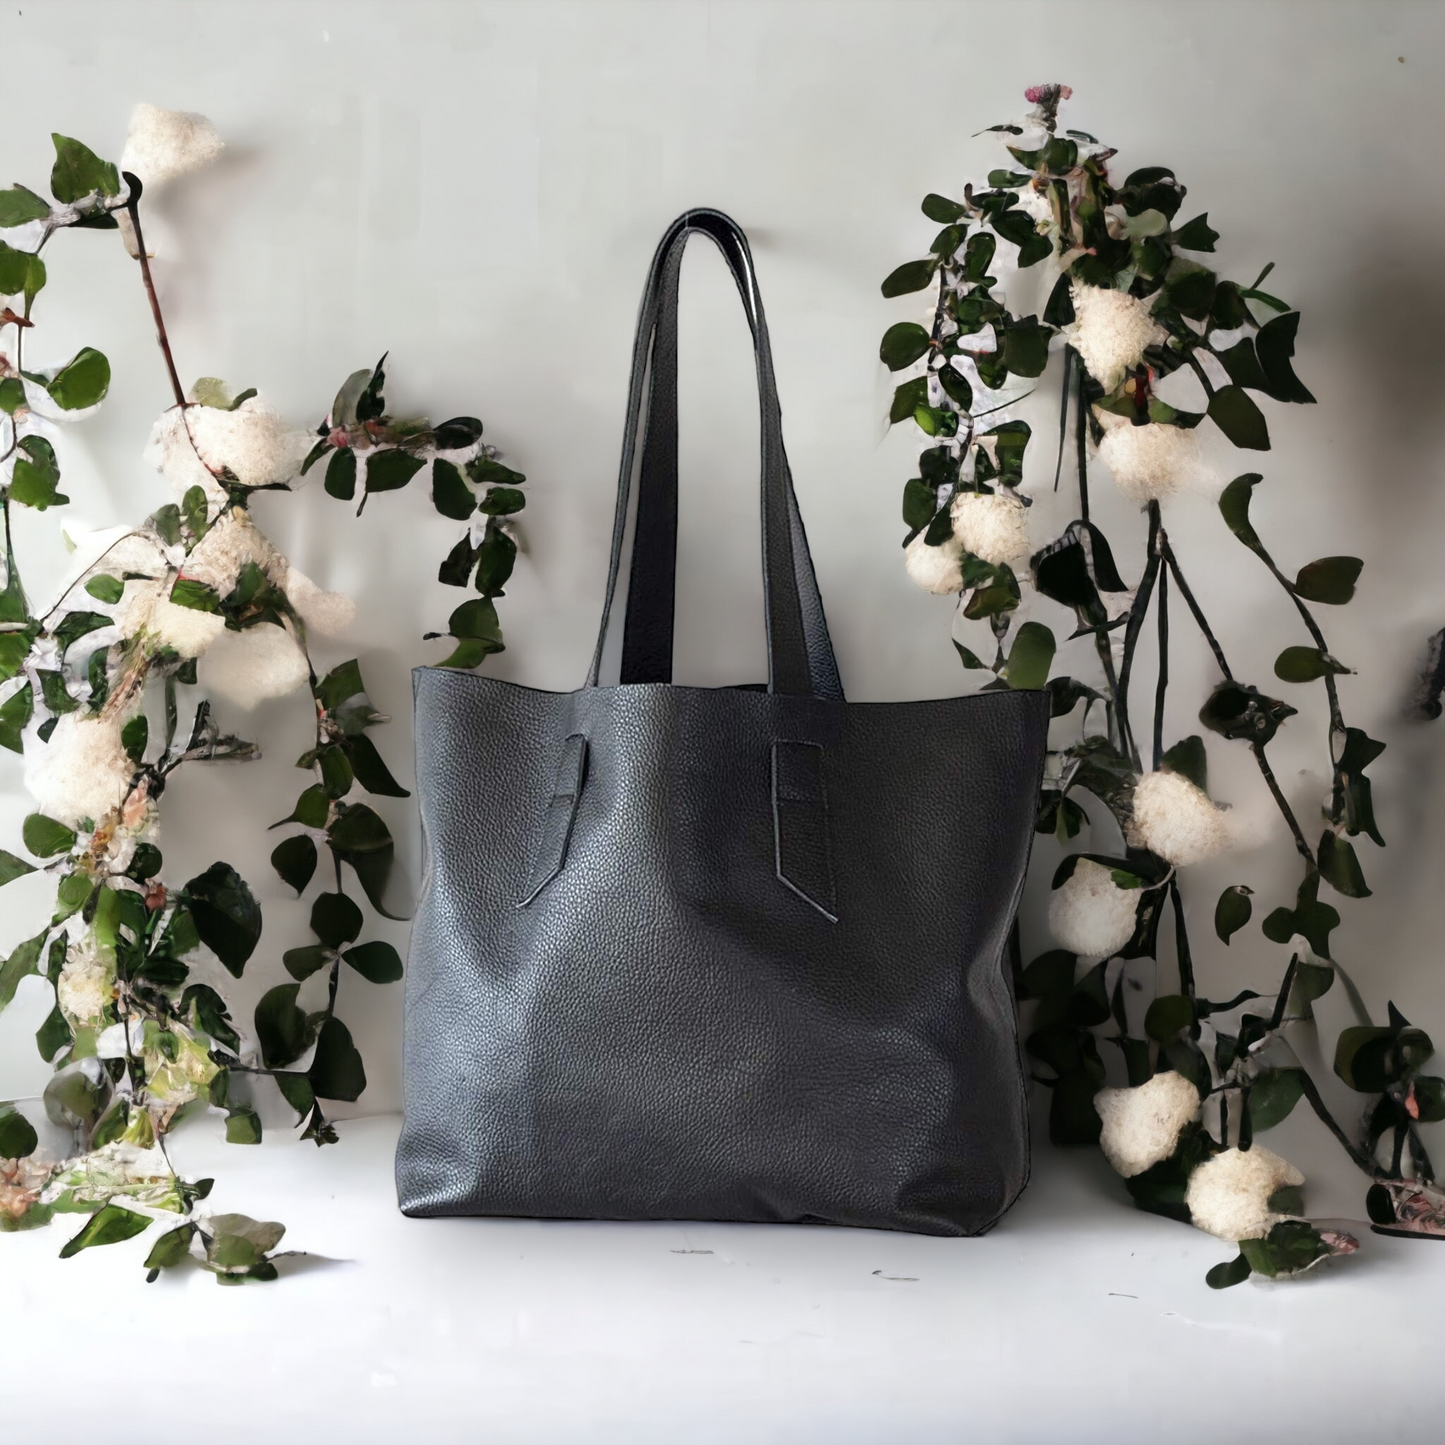 Black Genuine Leather Tote Bag for Women Shopper Purse Leather Shoulder Bag Large Marketing Bag Everyday Tote Bag Mothers Day Gift for Her